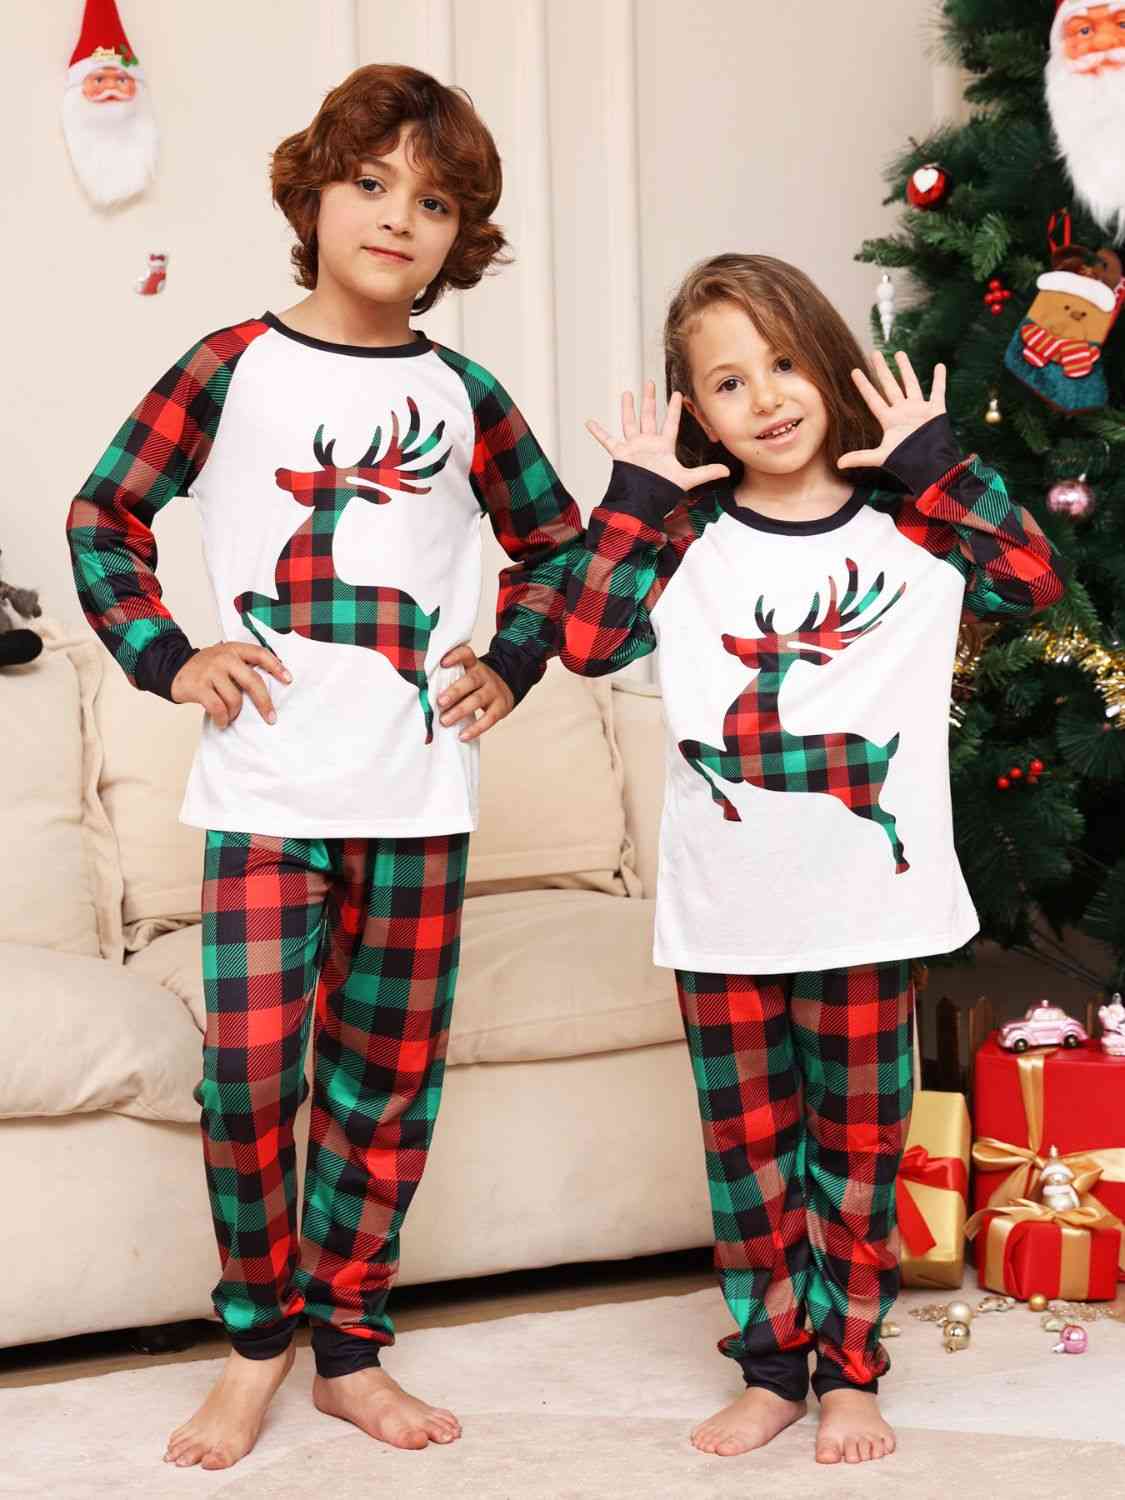 LITTLE KIDS CHRISTMAS Reindeer Graphic Top and Plaid Pants Set SZ 3M-18M